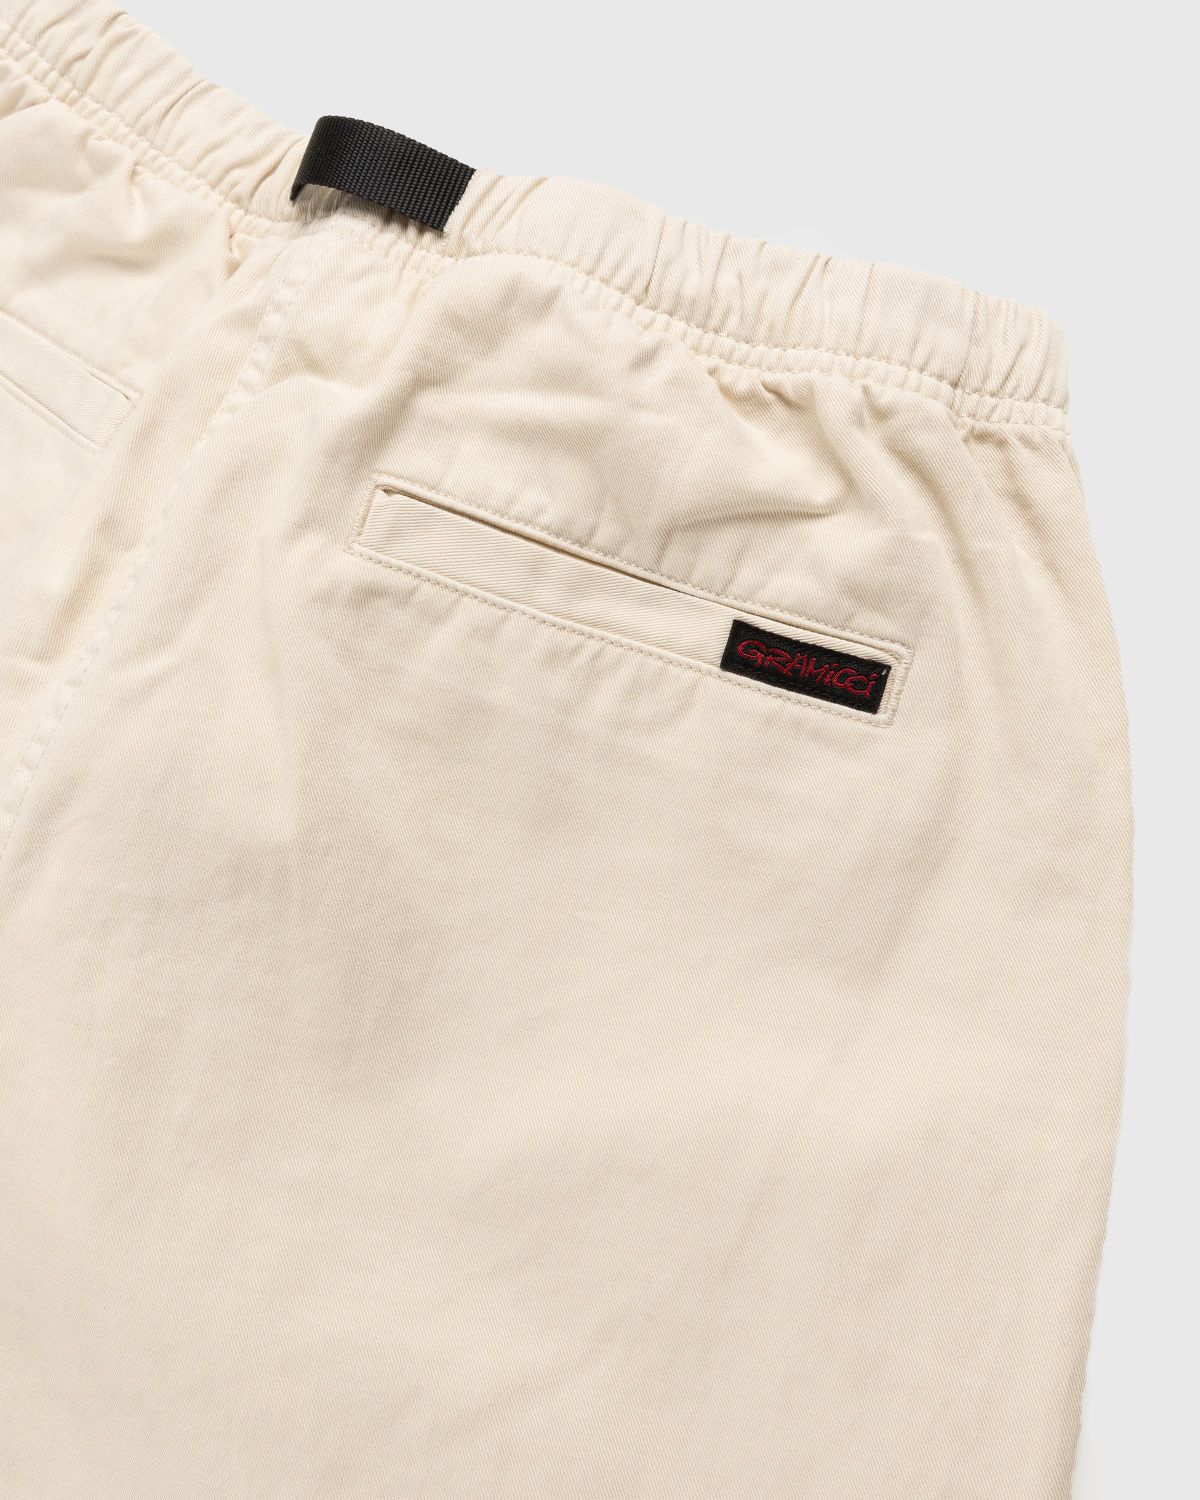 Gramicci – Gramicci Pant Greige - Trousers - White - Image 5